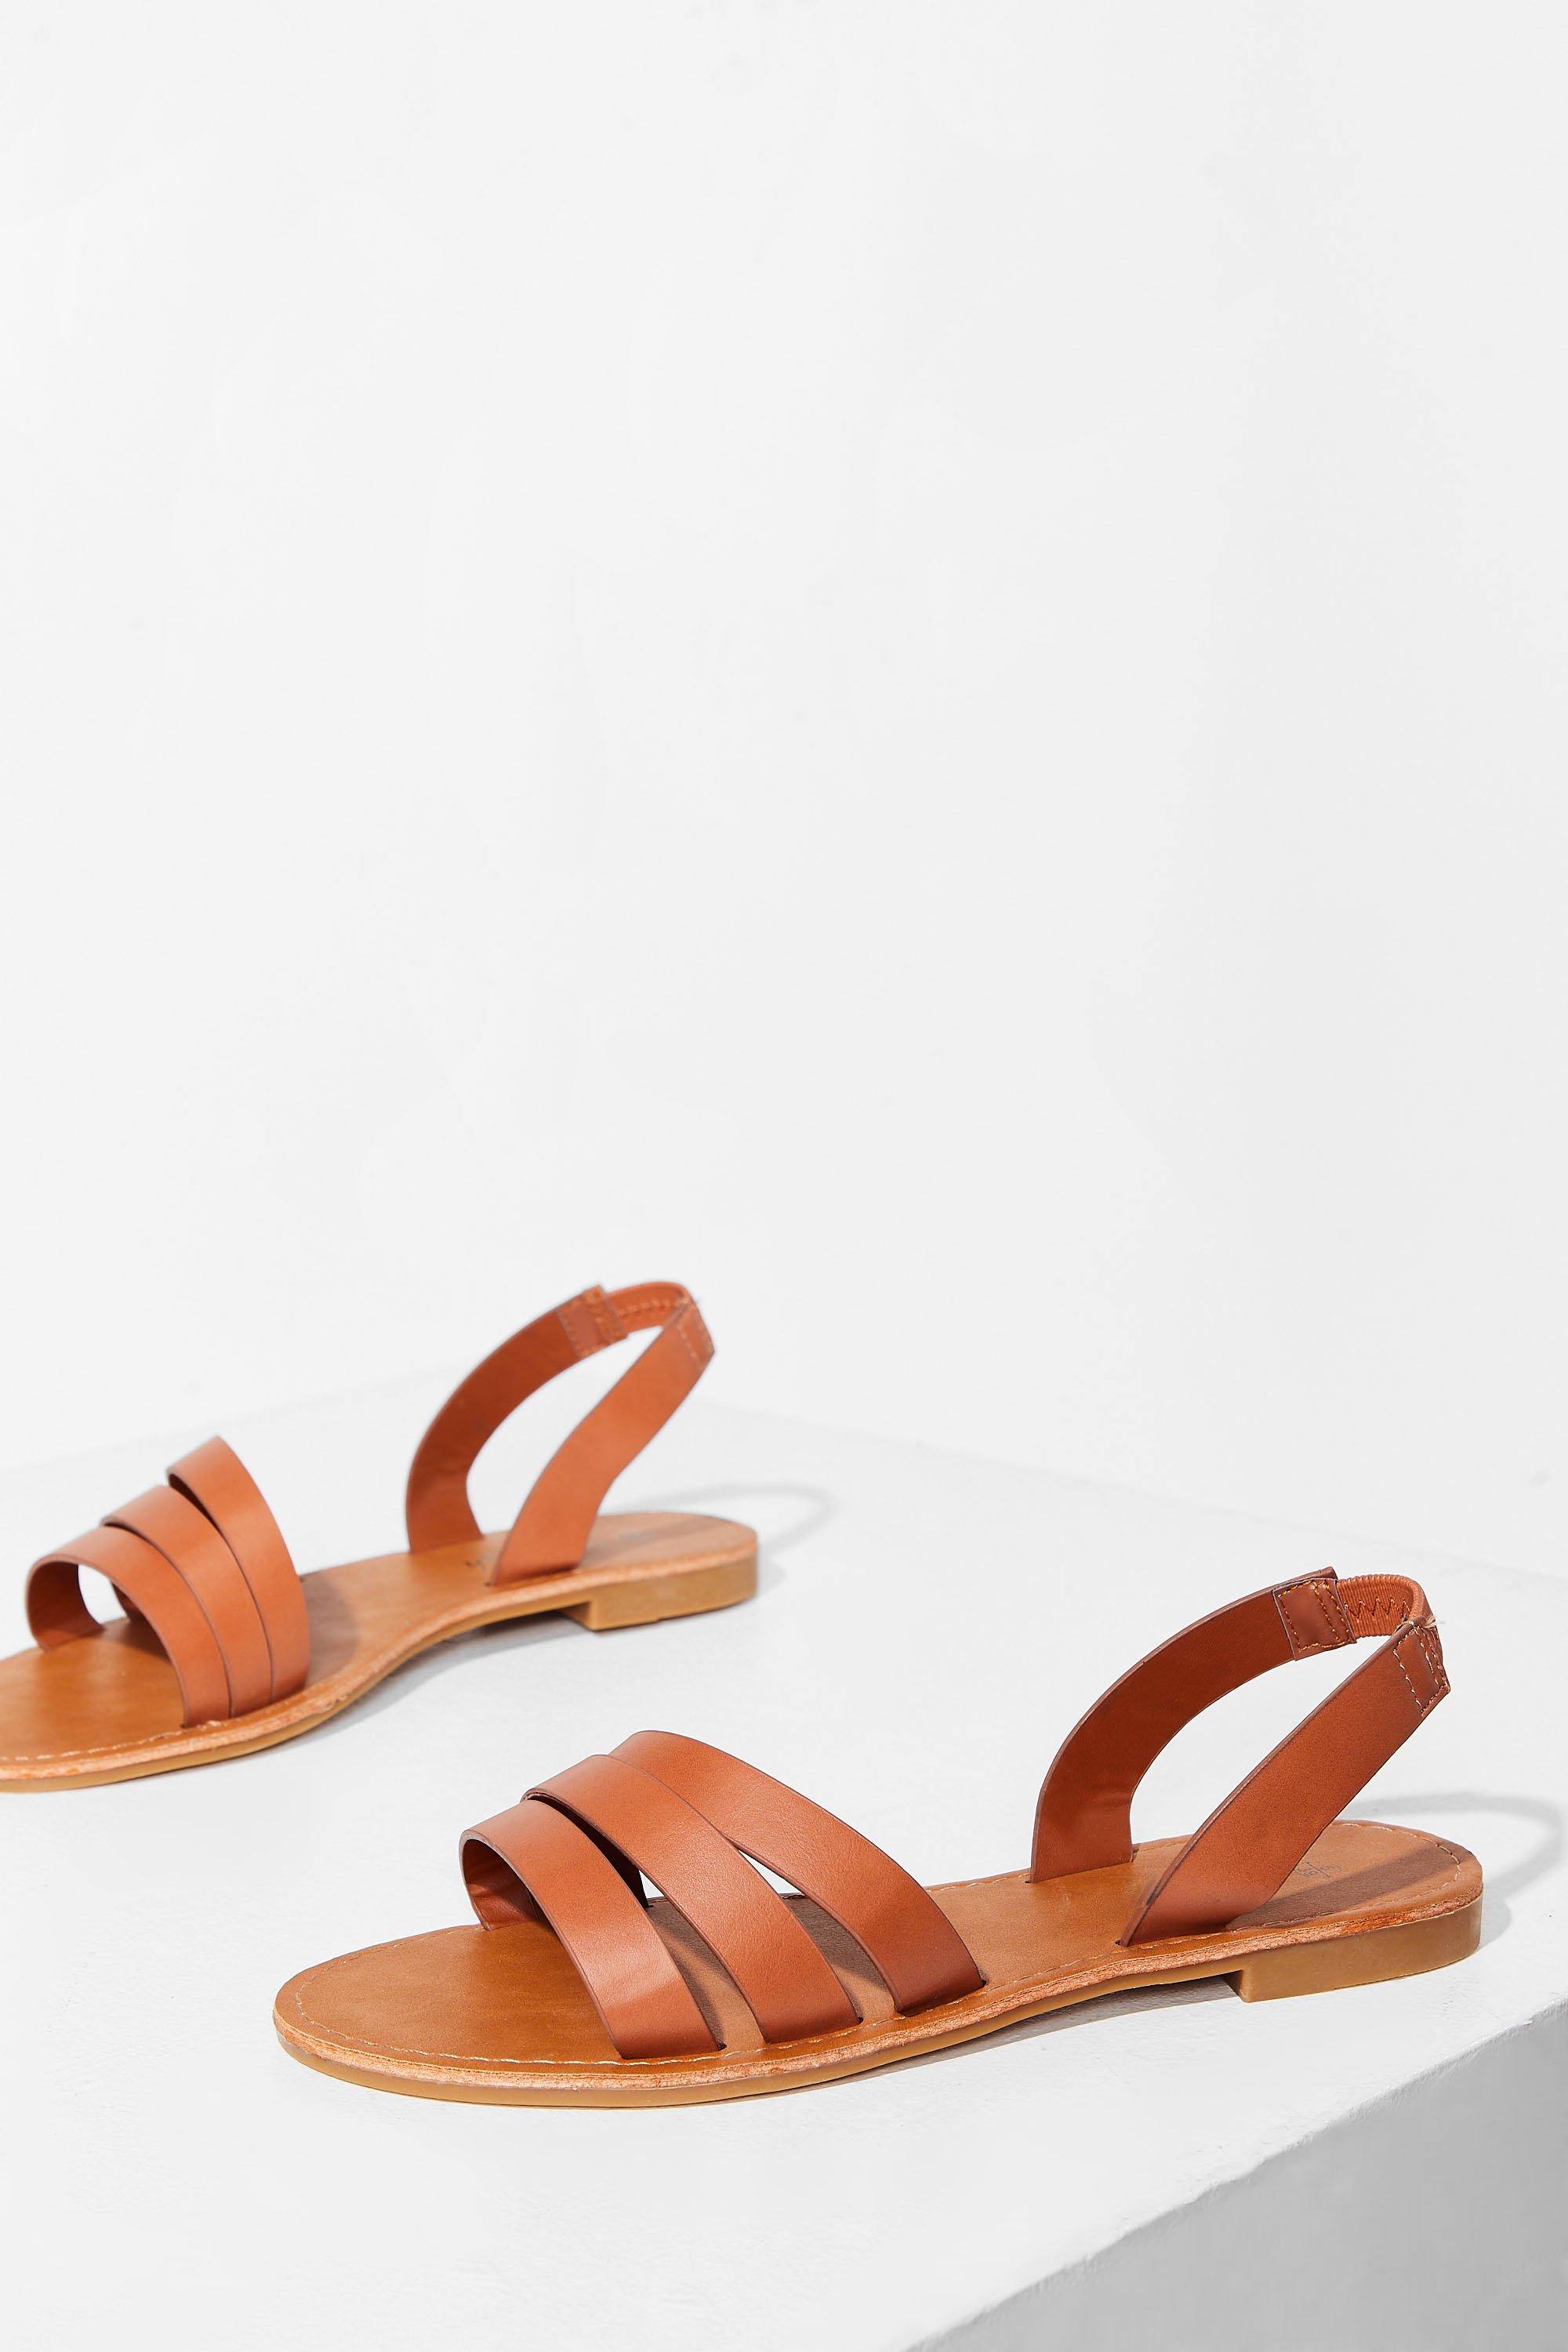 tan sandals wide fit